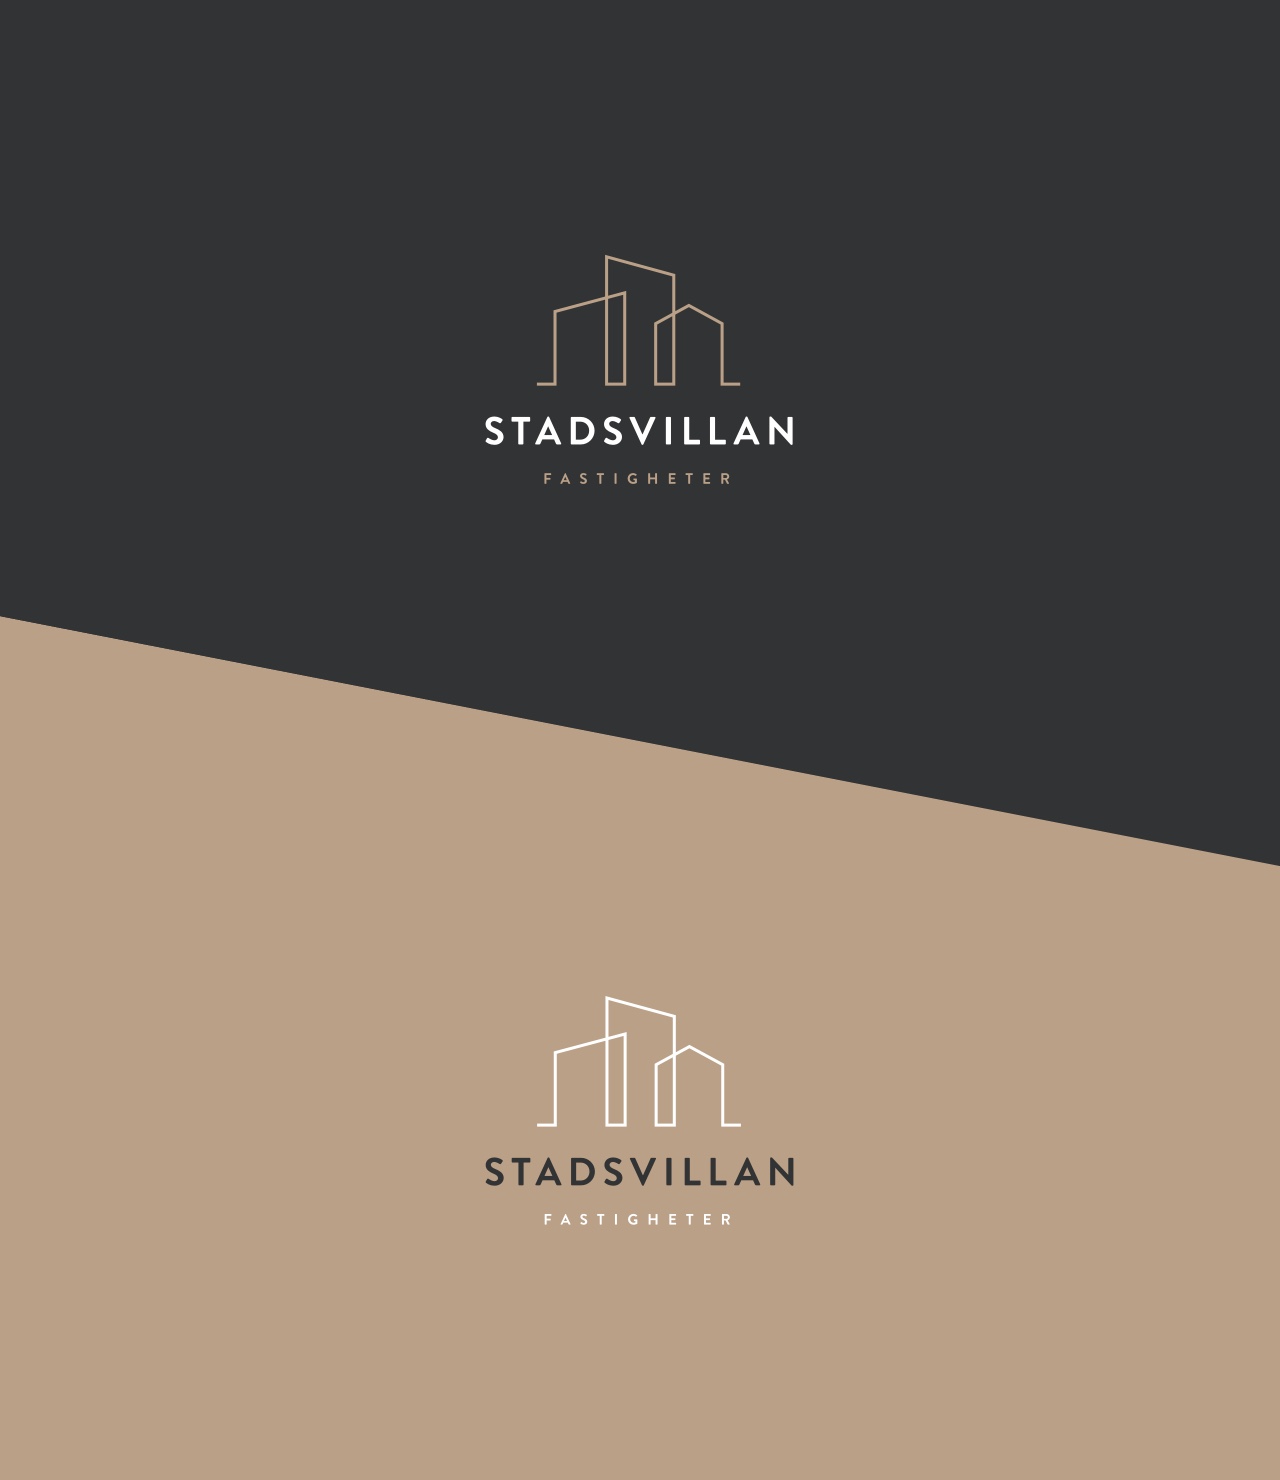 Stadsvillan negative and positive logotype